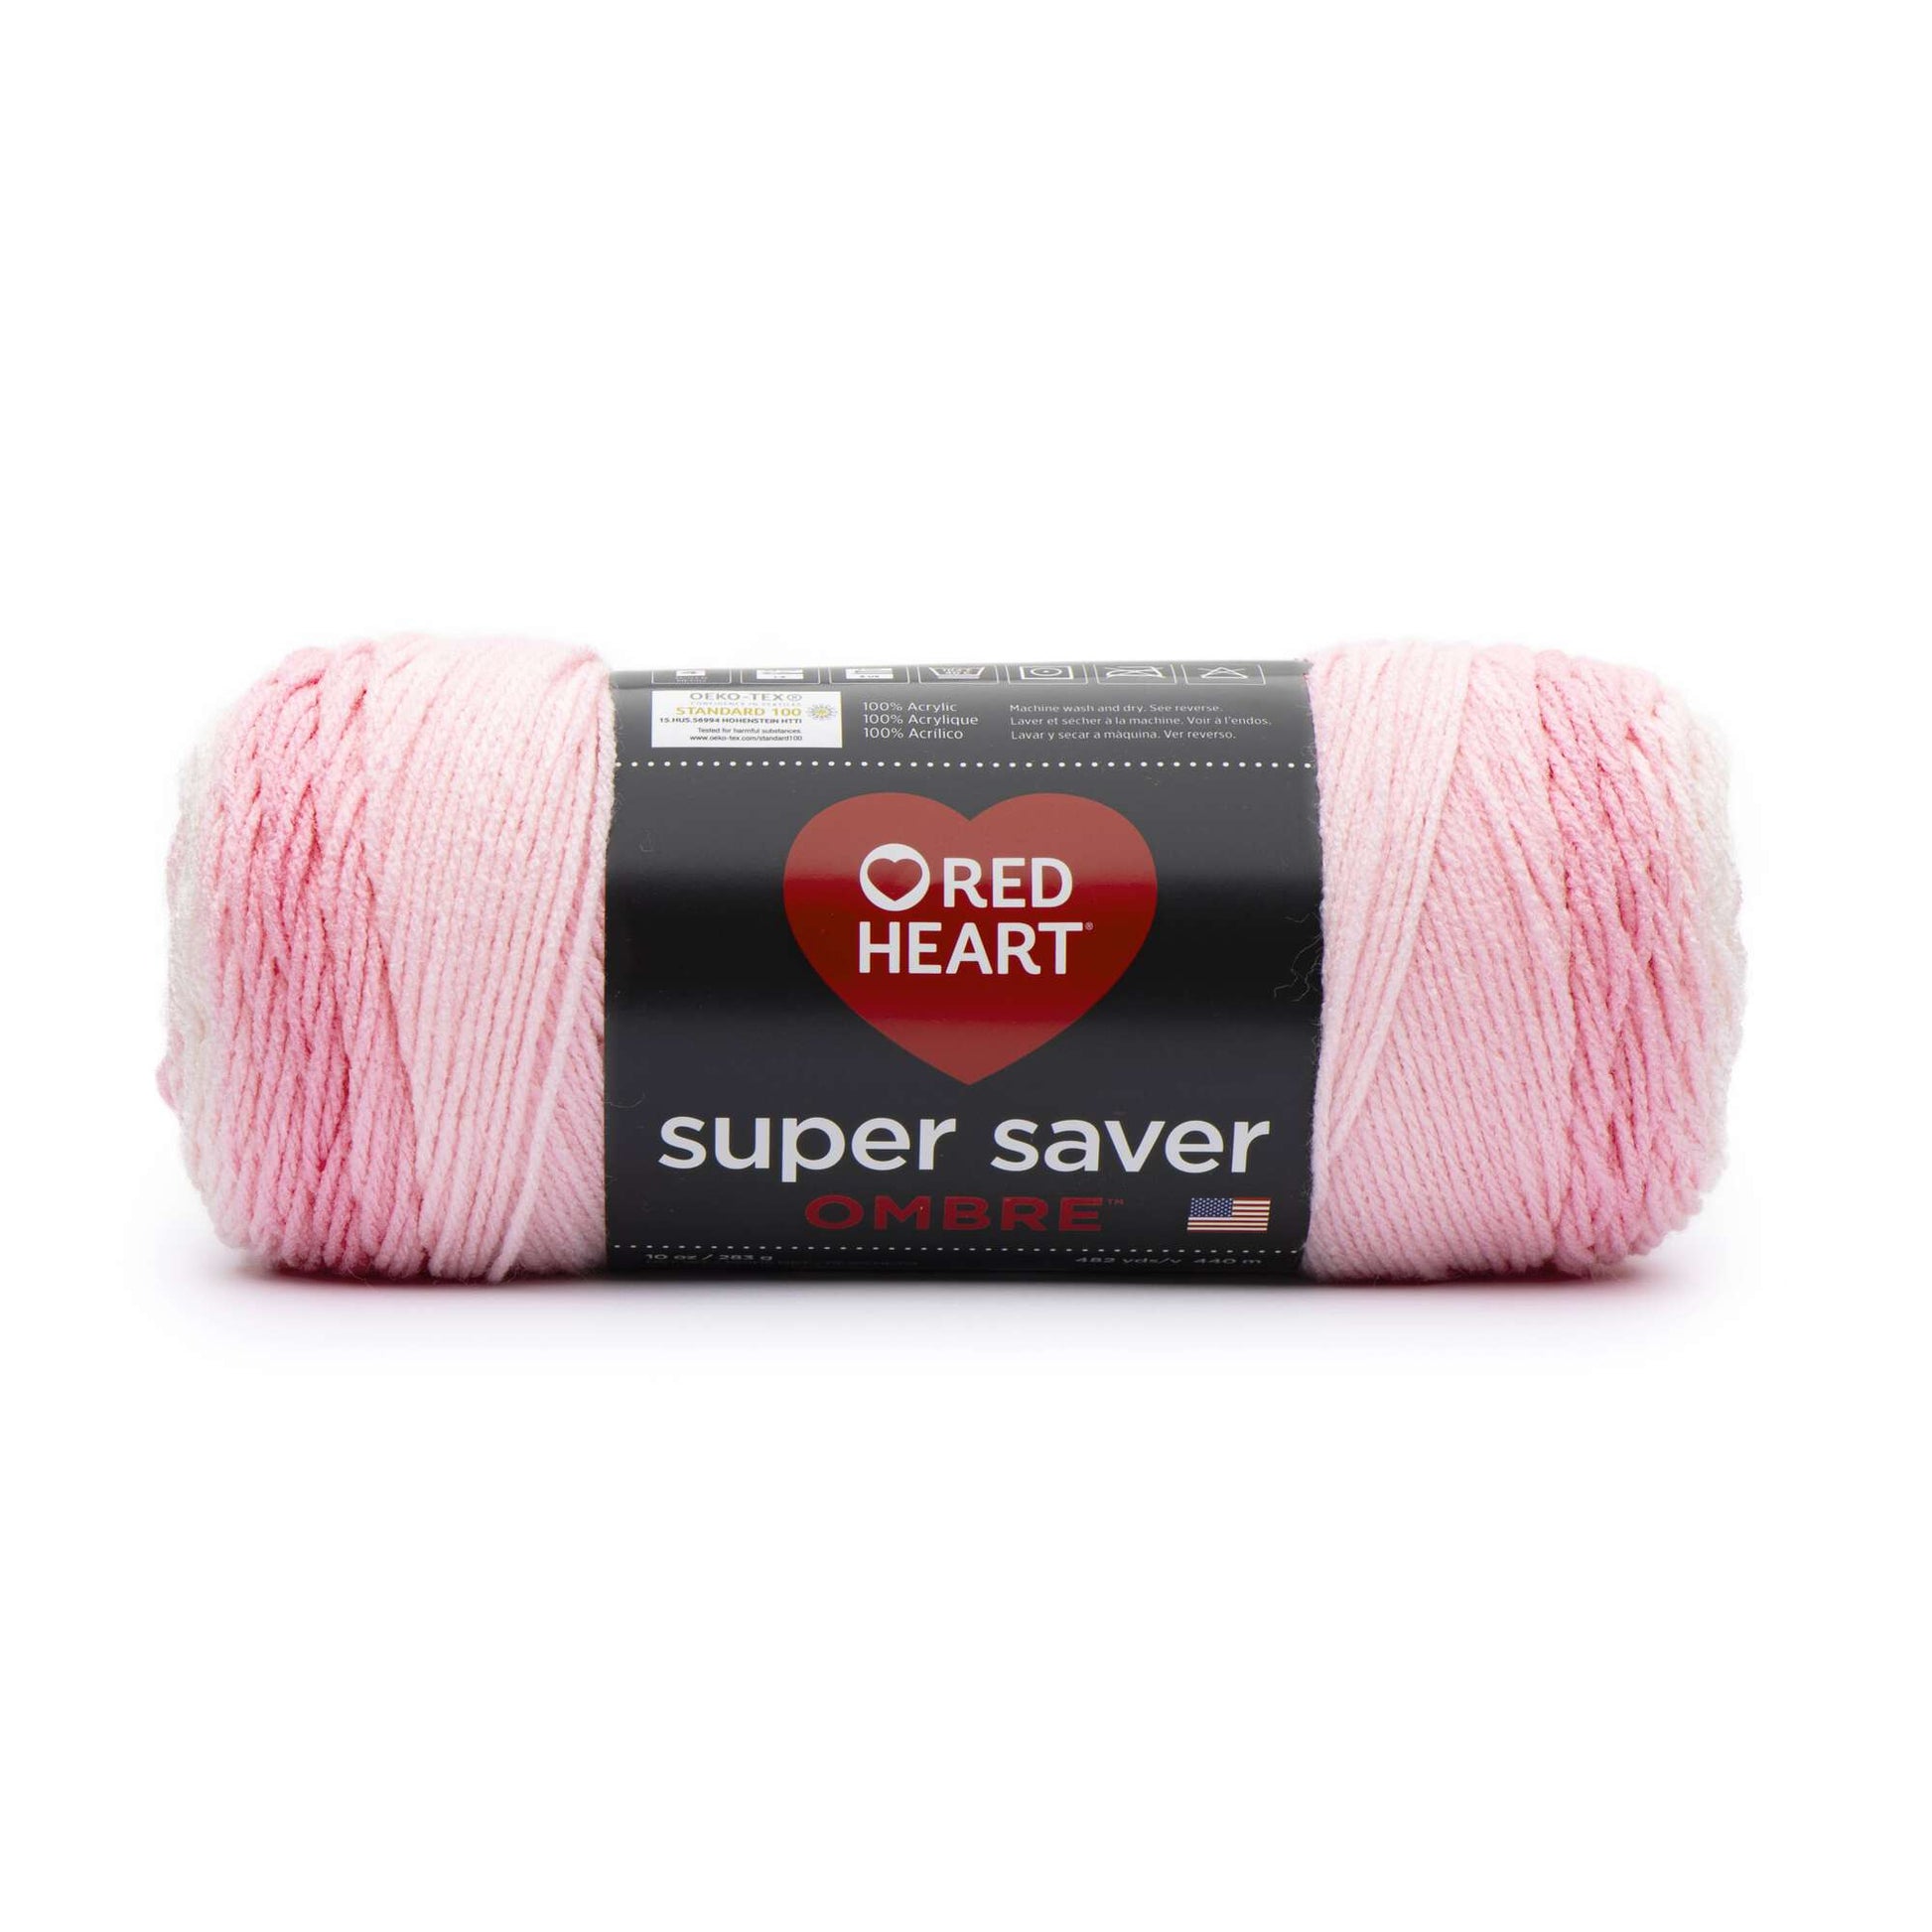 Red Heart Super Saver Ombre 4 Medium Acrylic Yarn, Anemone 10oz/283g, 482 Yards (4 Pack), Size: Medium (4)